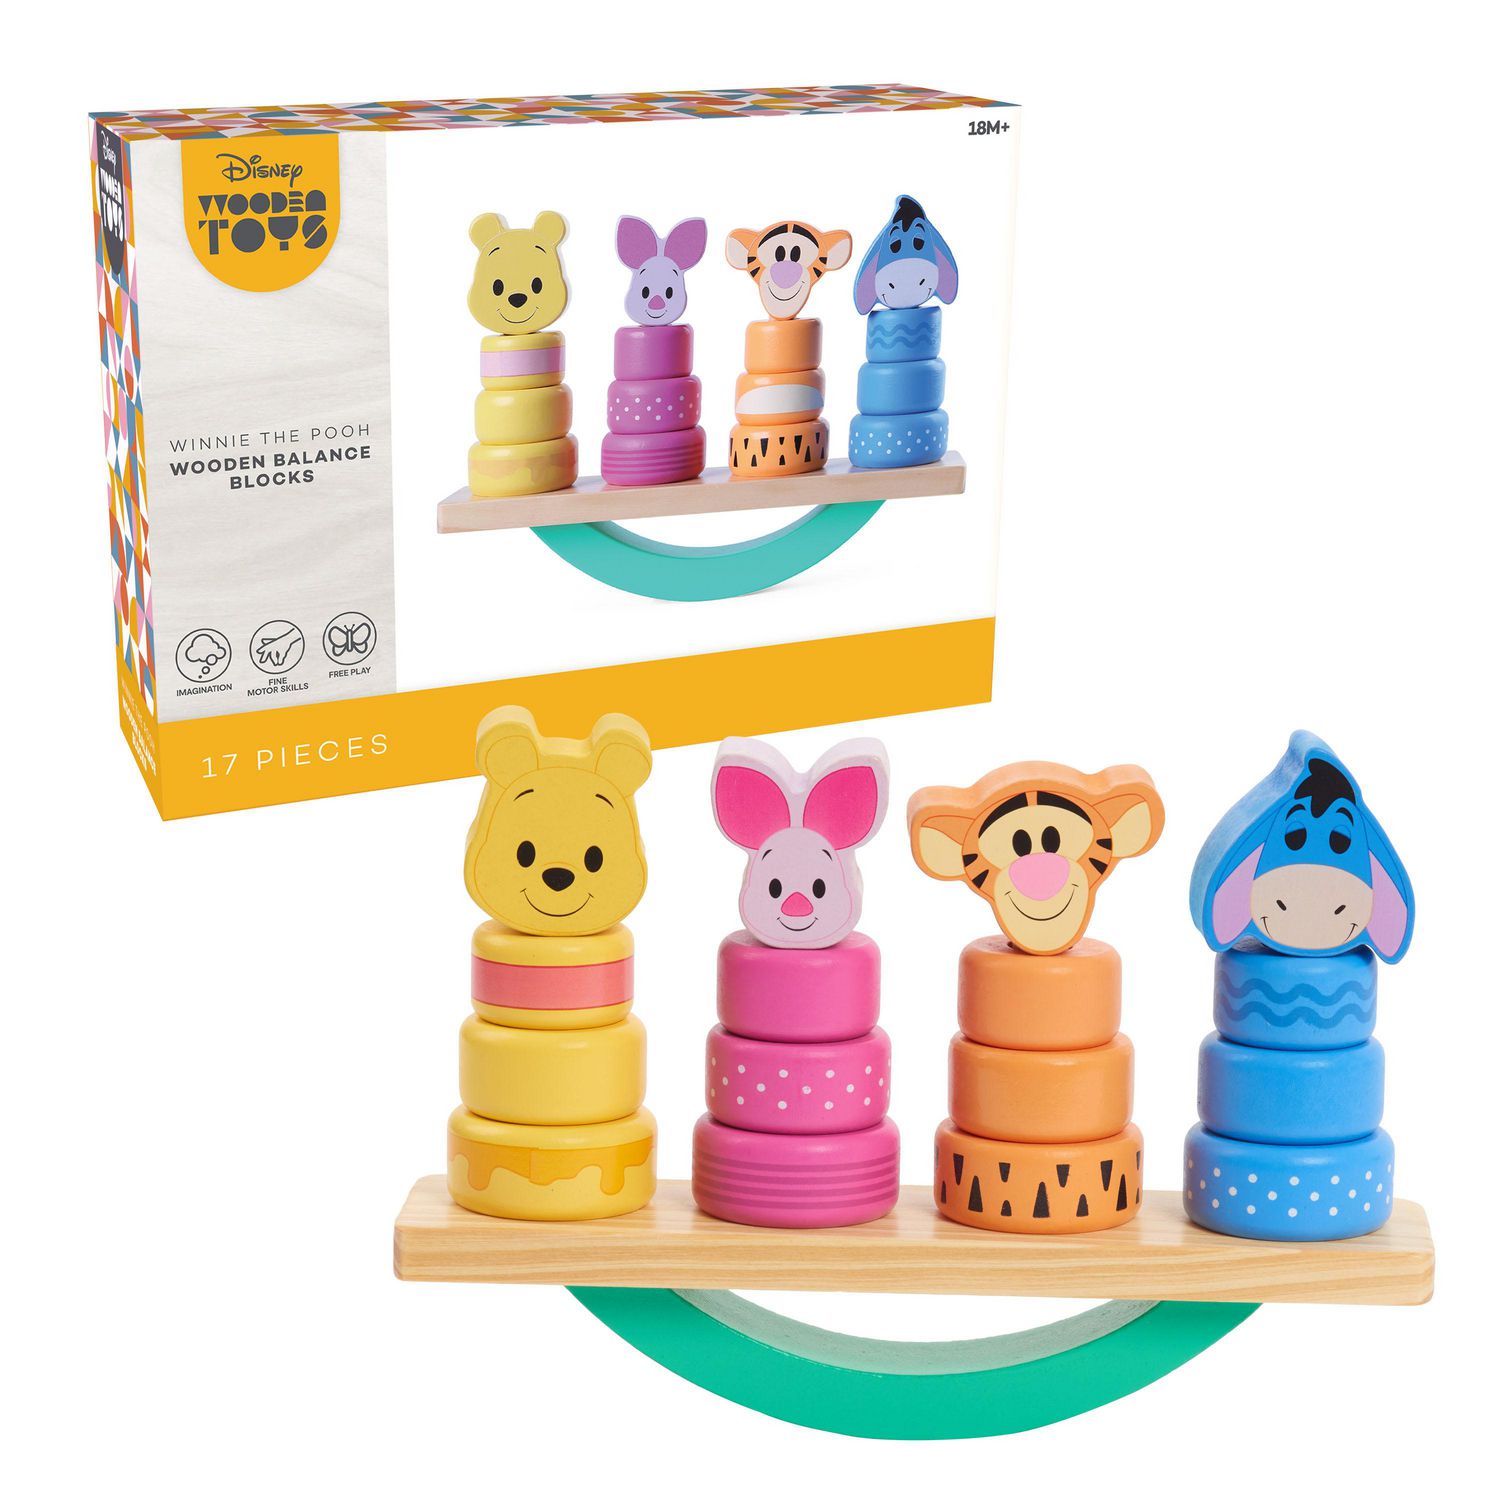 Disney Wooden Toys Winnie the Pooh Balance Blocks, 17-Piece Set